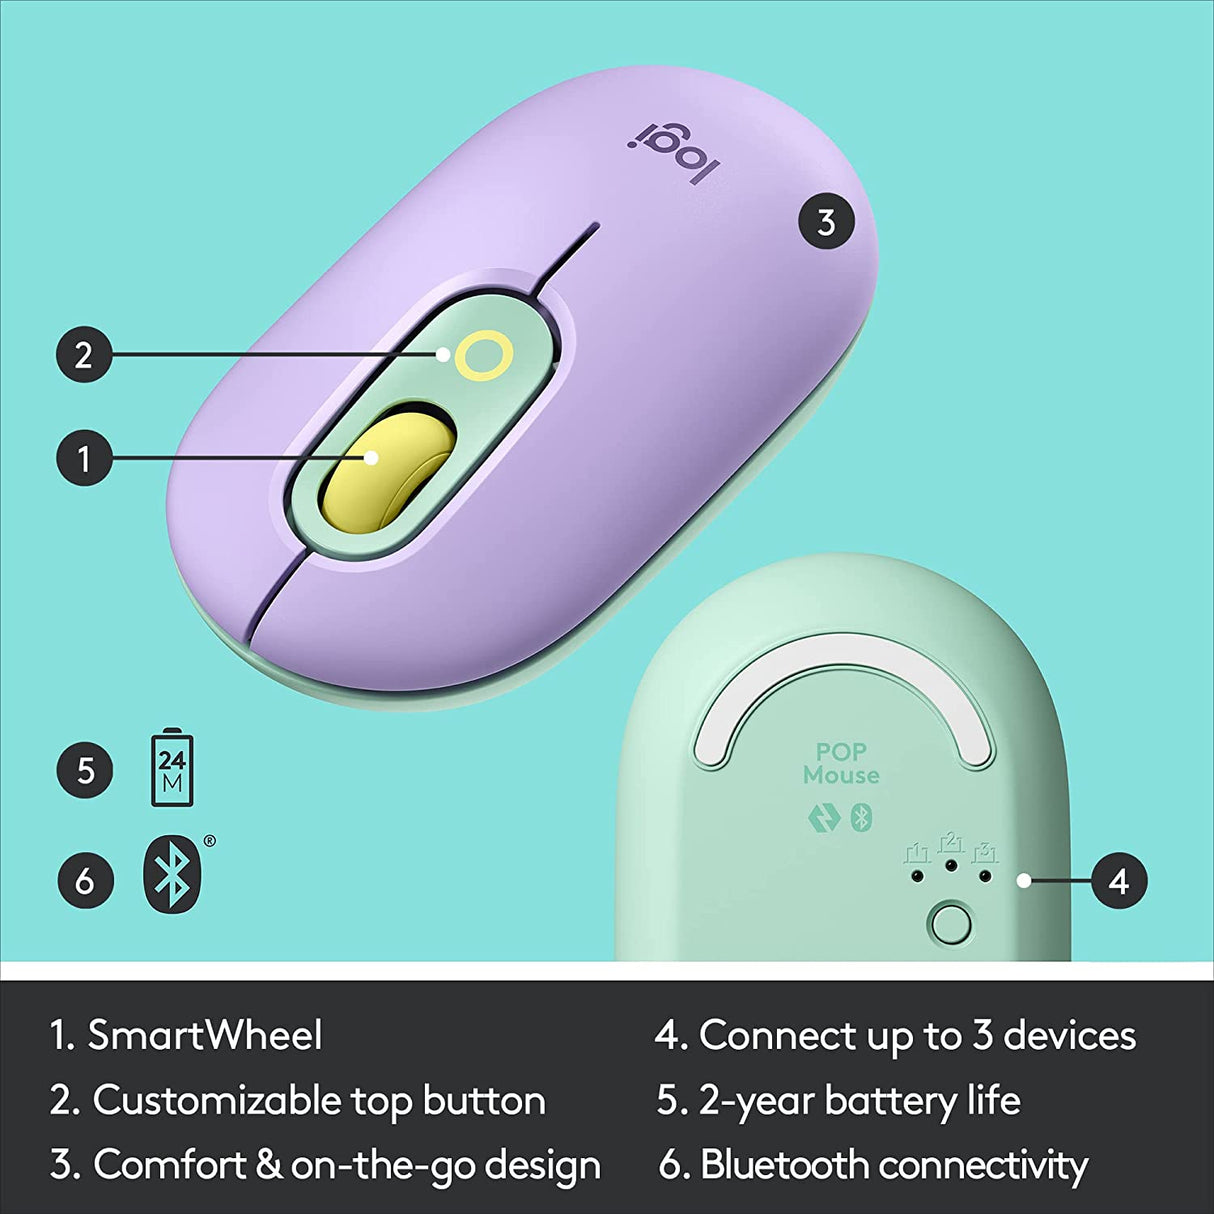 Logitech POP Mouse, Wireless Mouse with Customizable Emojis, SilentTou –